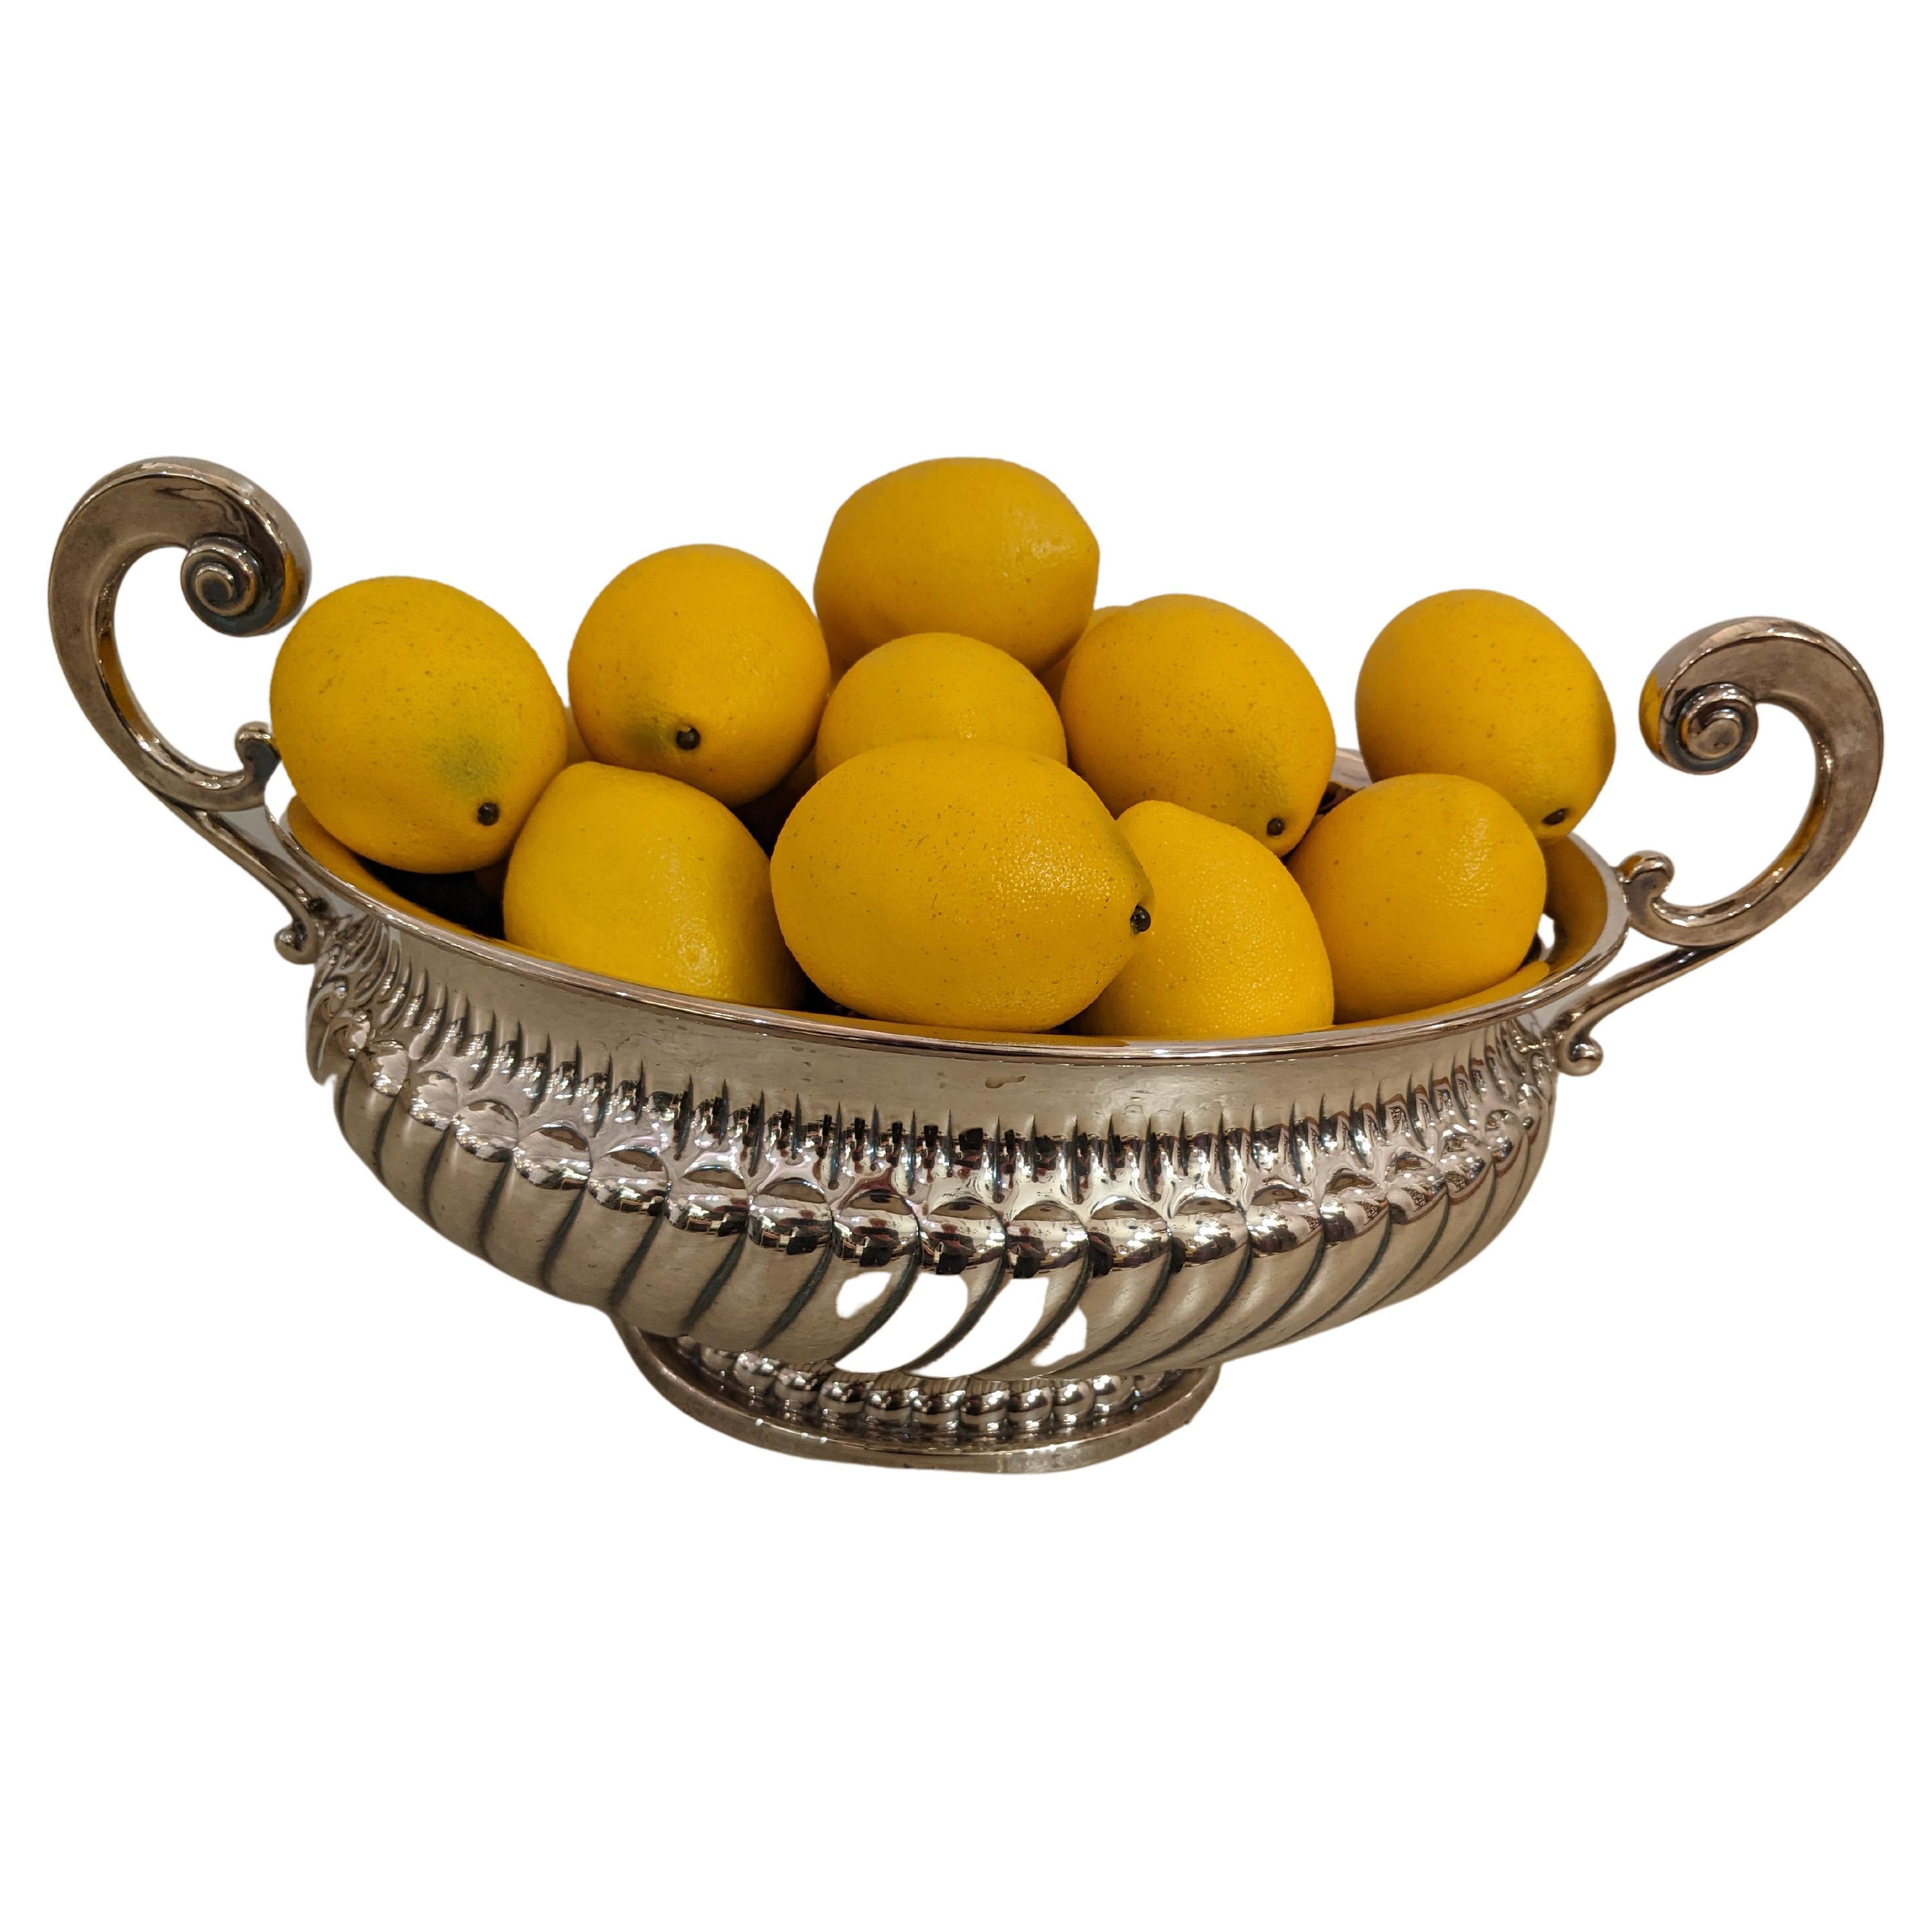 Elegant Glistening Silverplate Tureen with Lemons For Sale